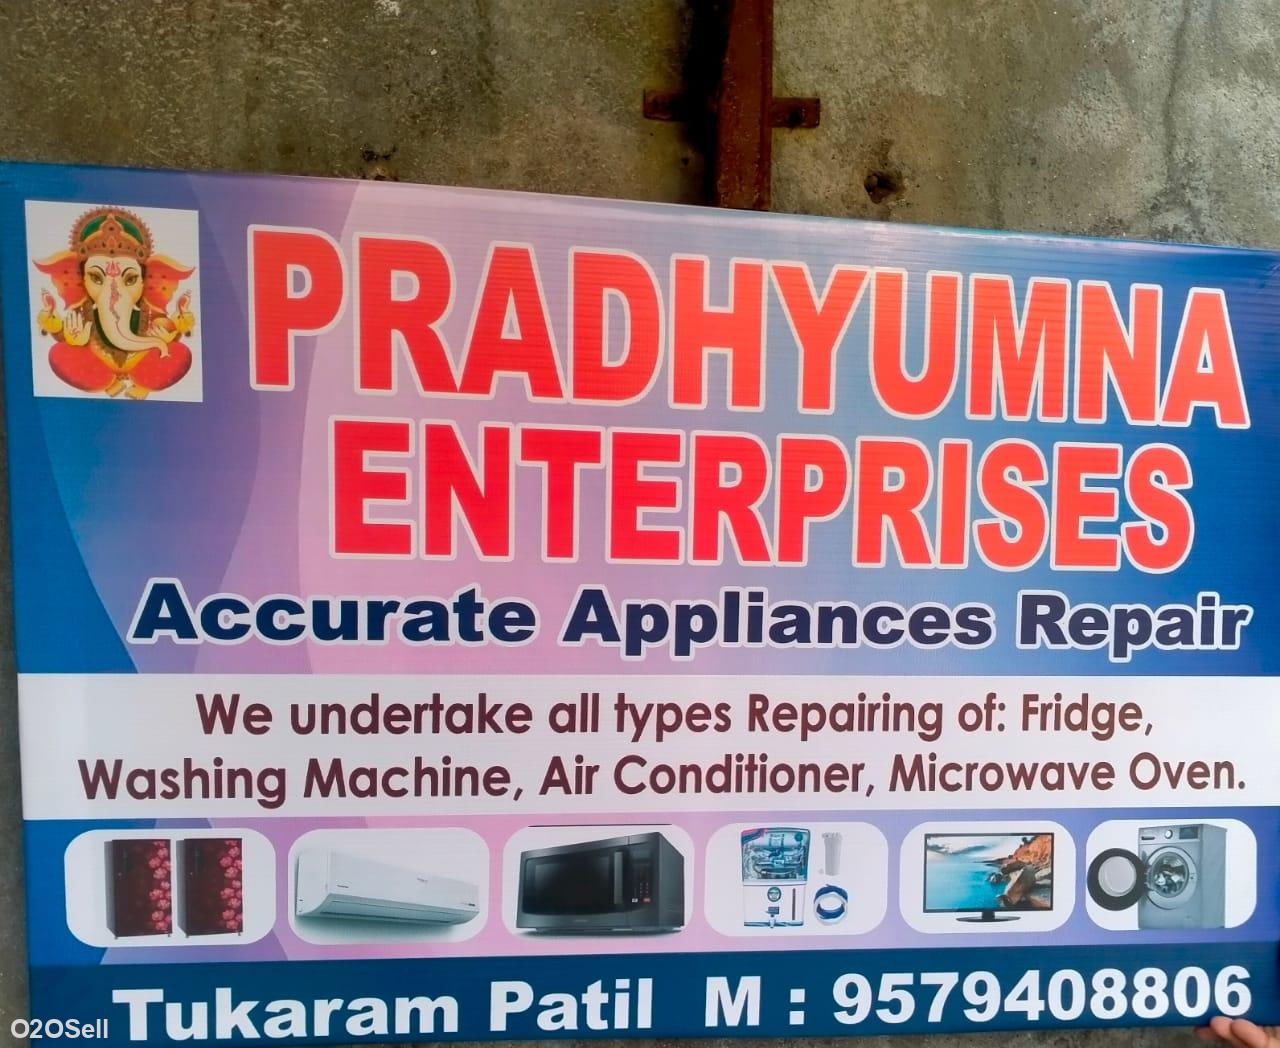 Pradhyumna Enterprises - Profile Image